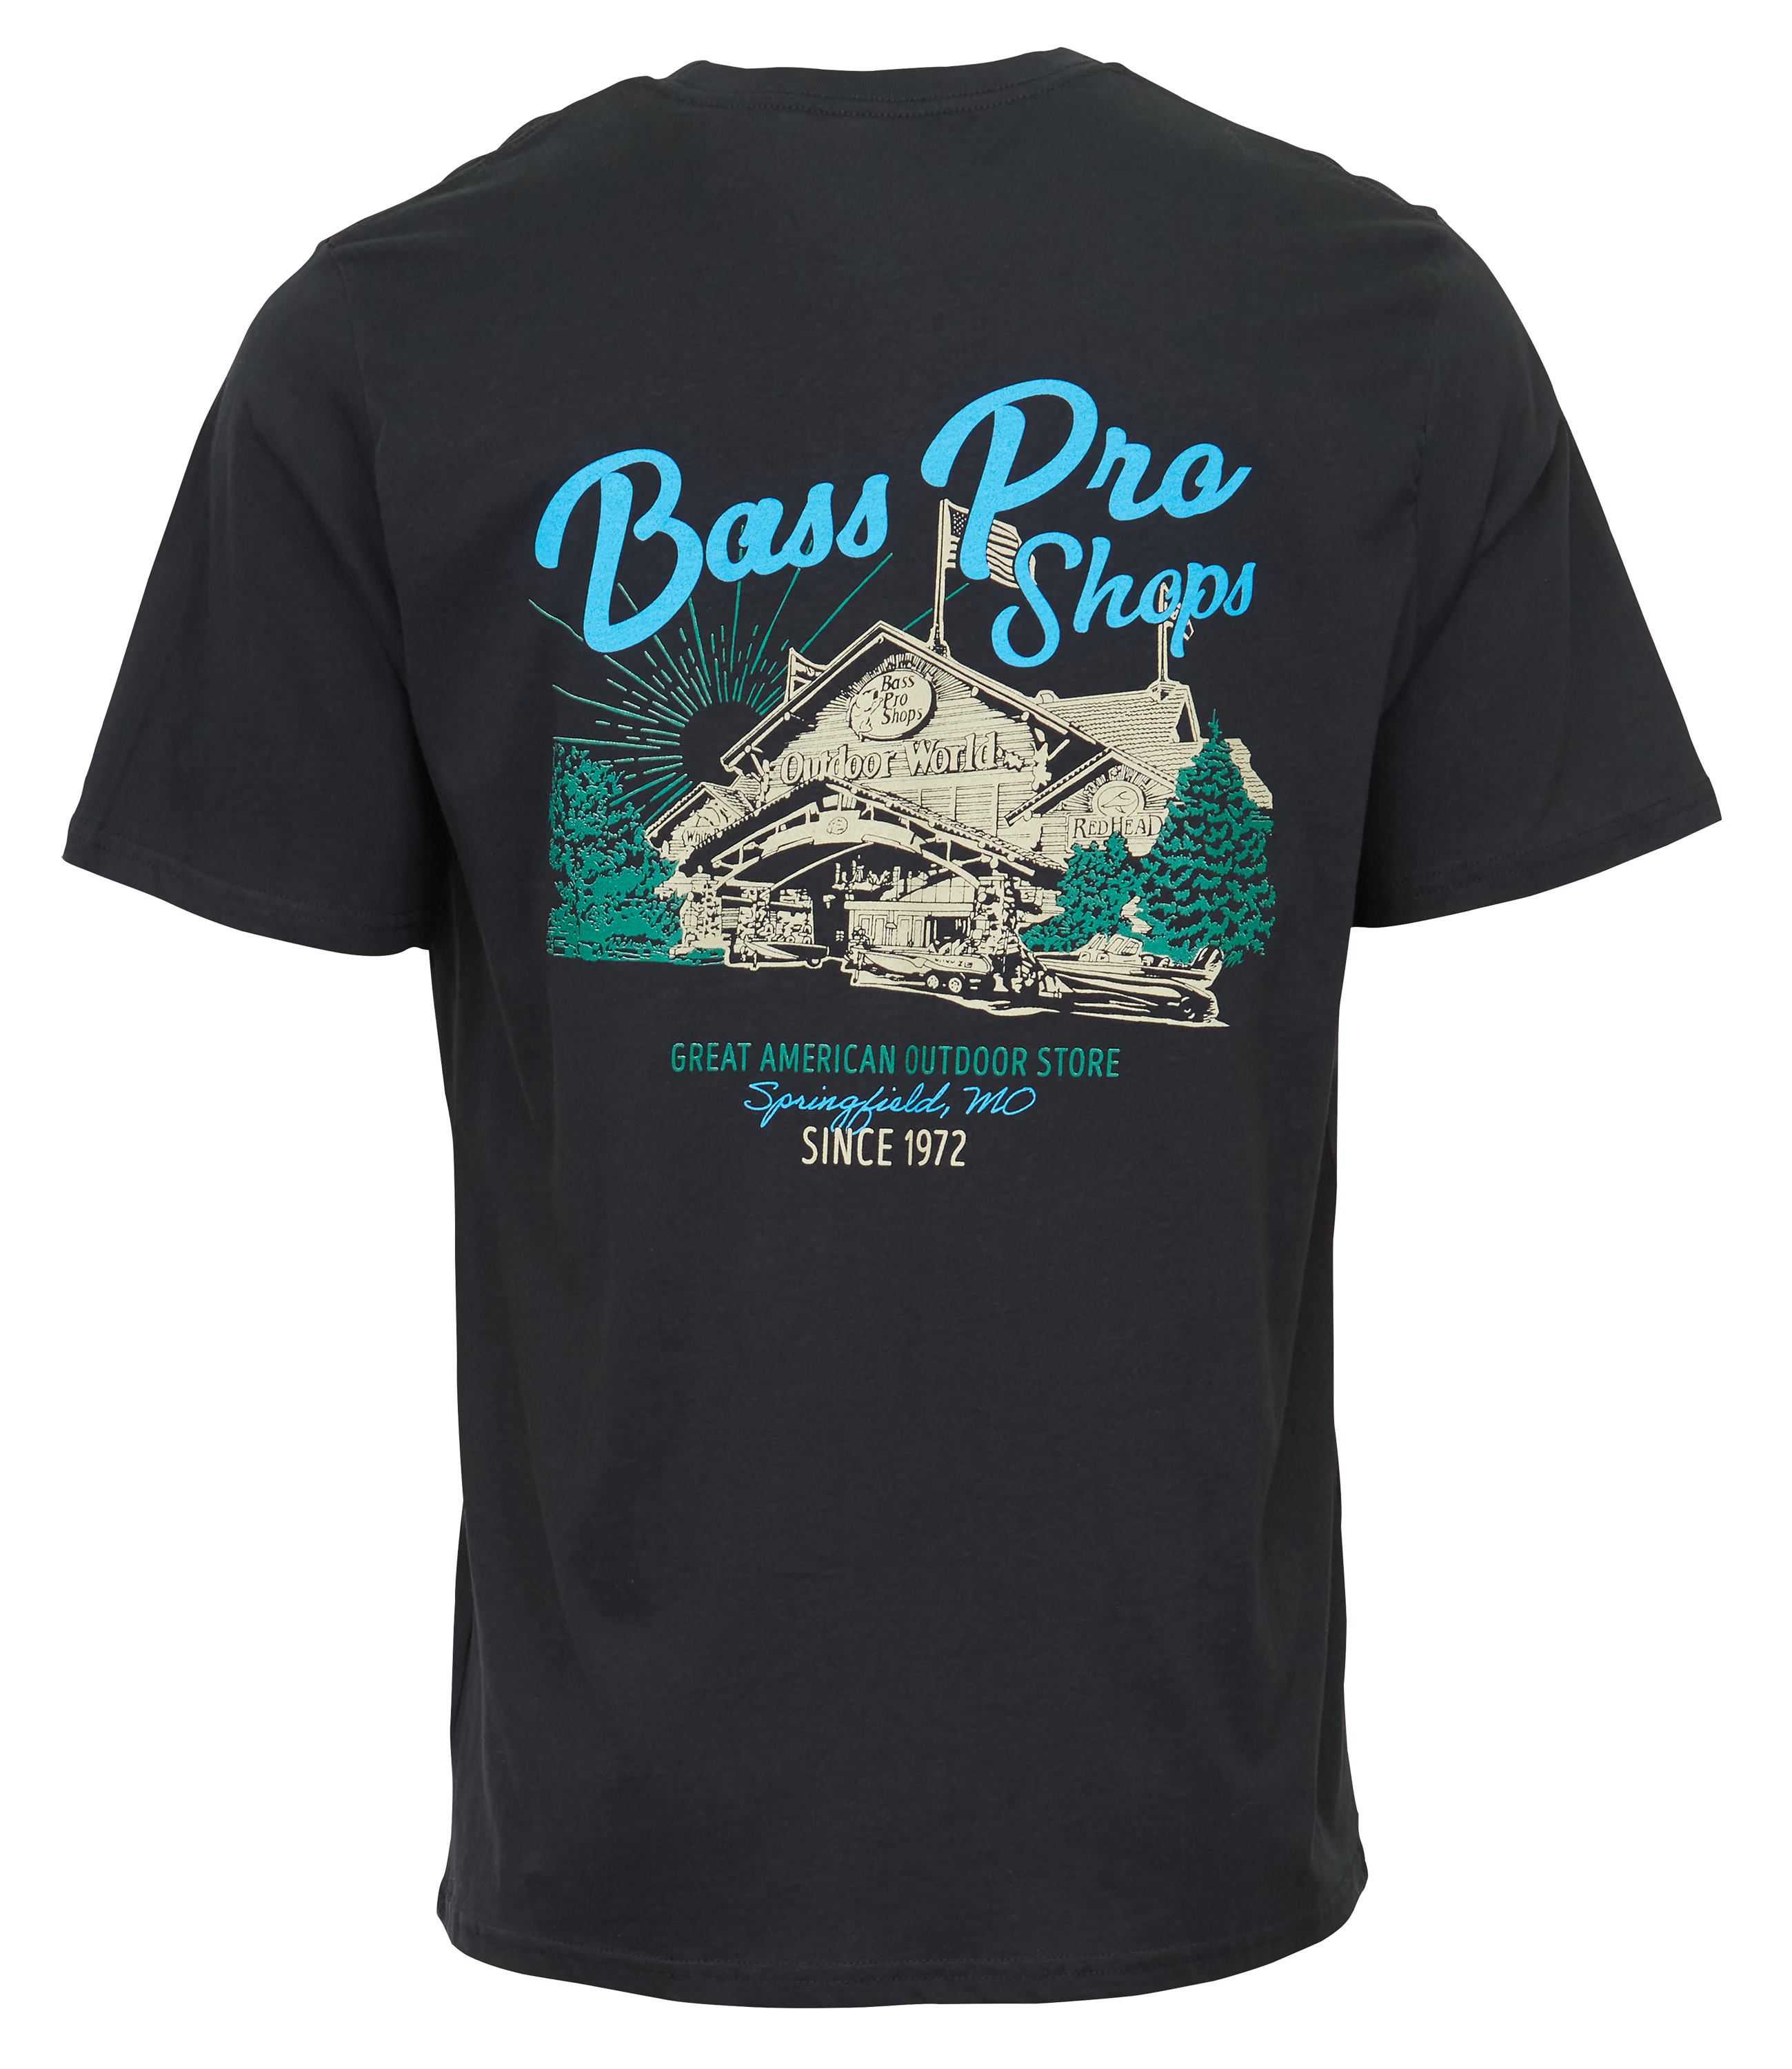 Bass Pro Shops scenic Short-Sleeve T-Shirt for Men - Black - 2XL